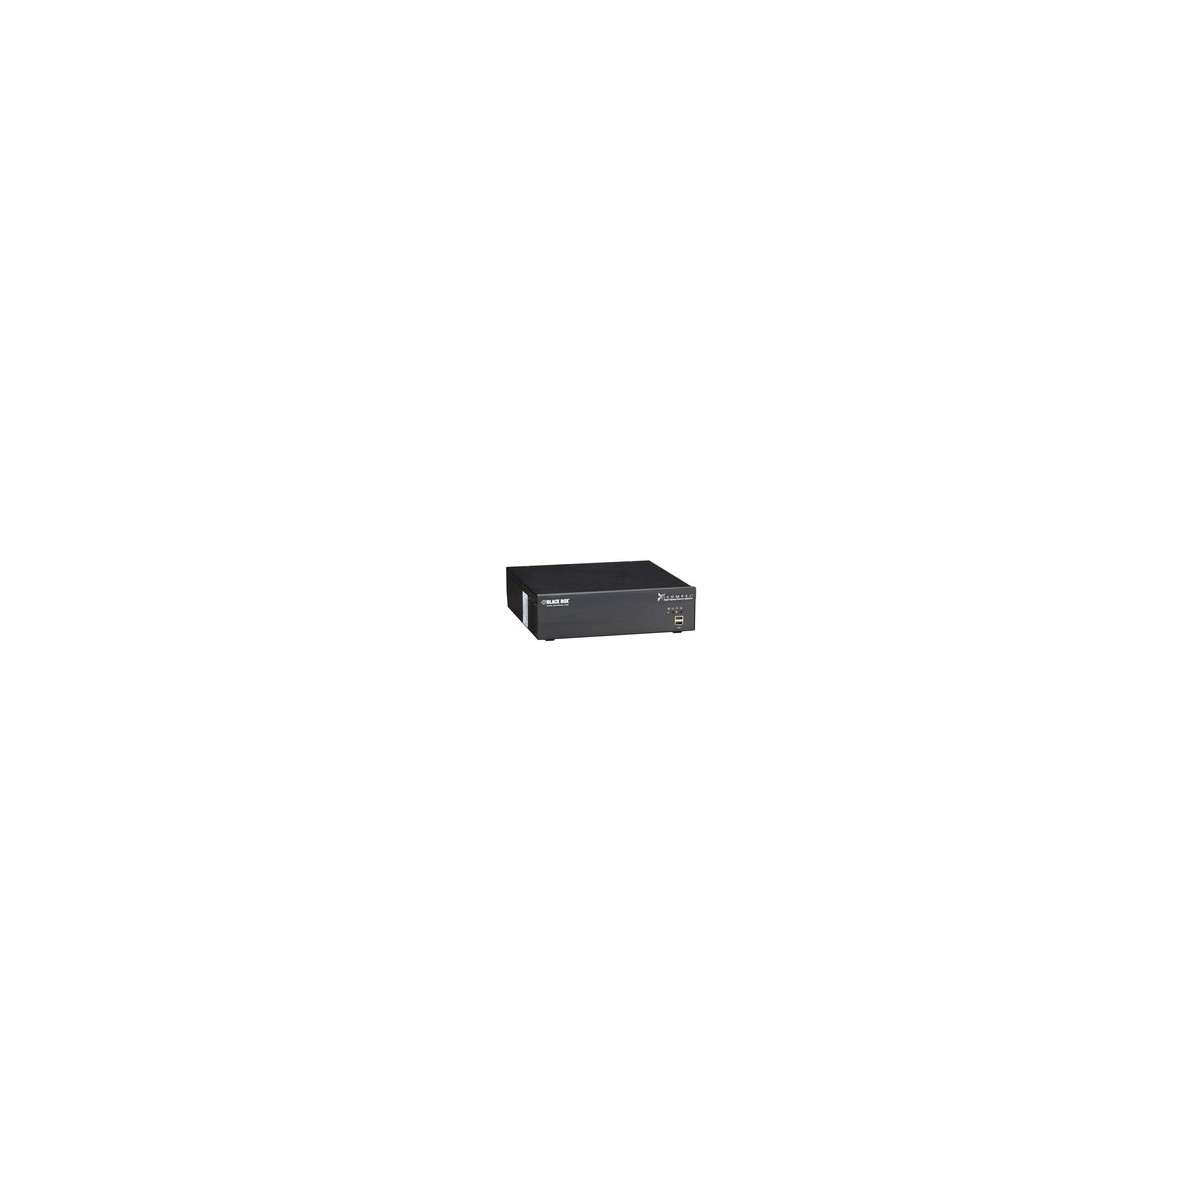 Black Box ICC-AP-100 - Black - Intel - HDD - 500 GB - 16 MB - 280 mm